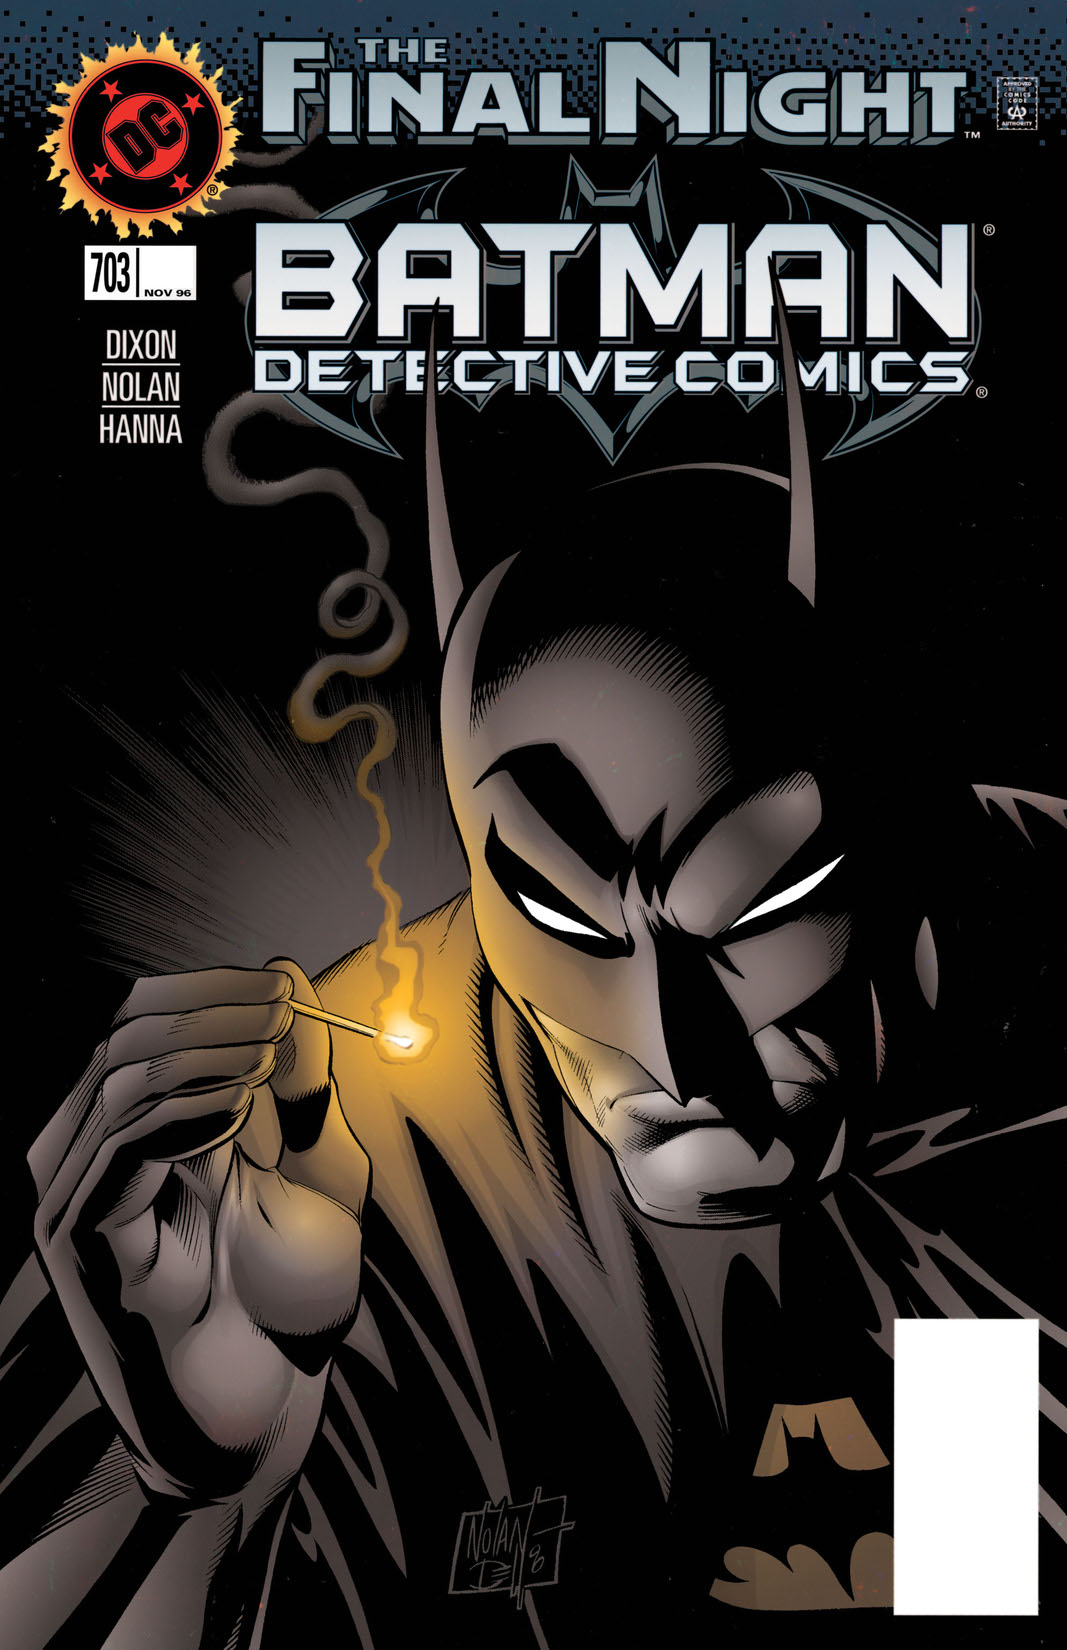 Detective Comics (1937-) #703 preview images